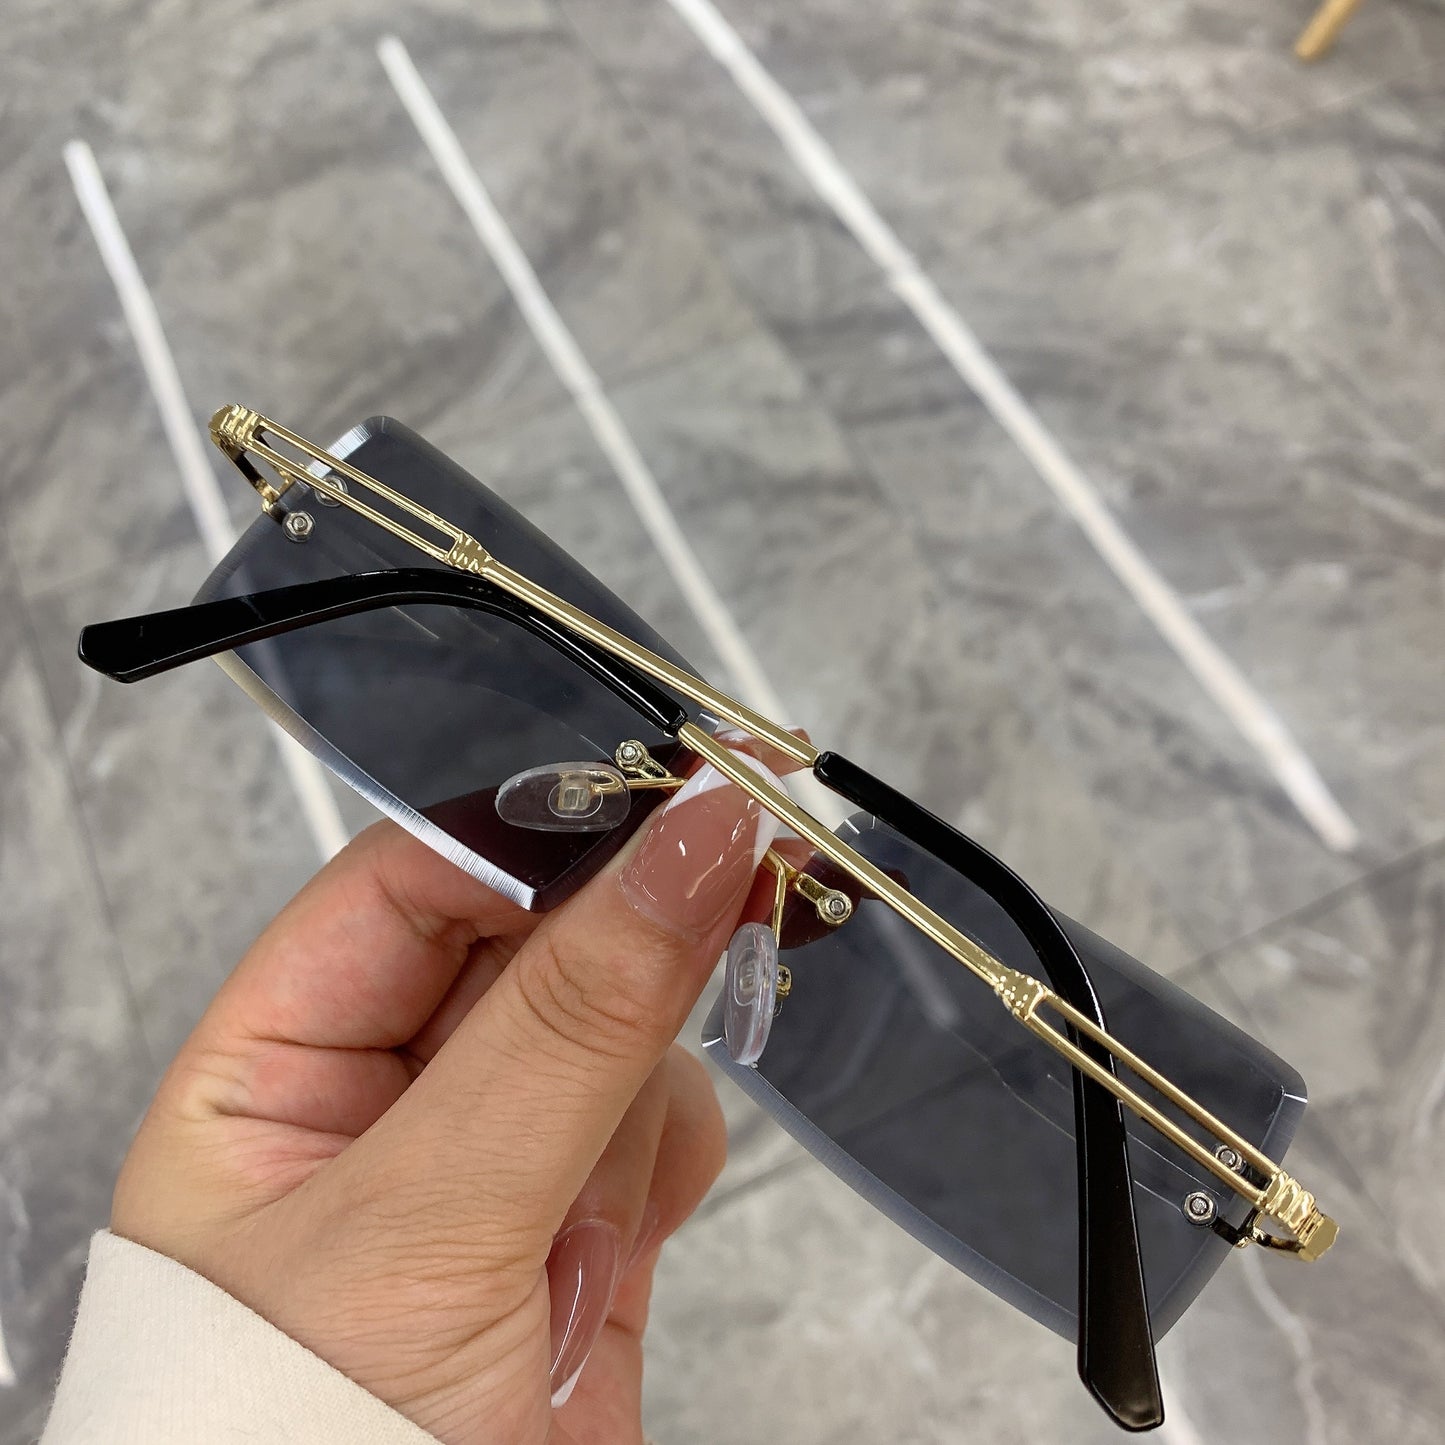 Sunglasses Rimless Frameless Rectangle Shades